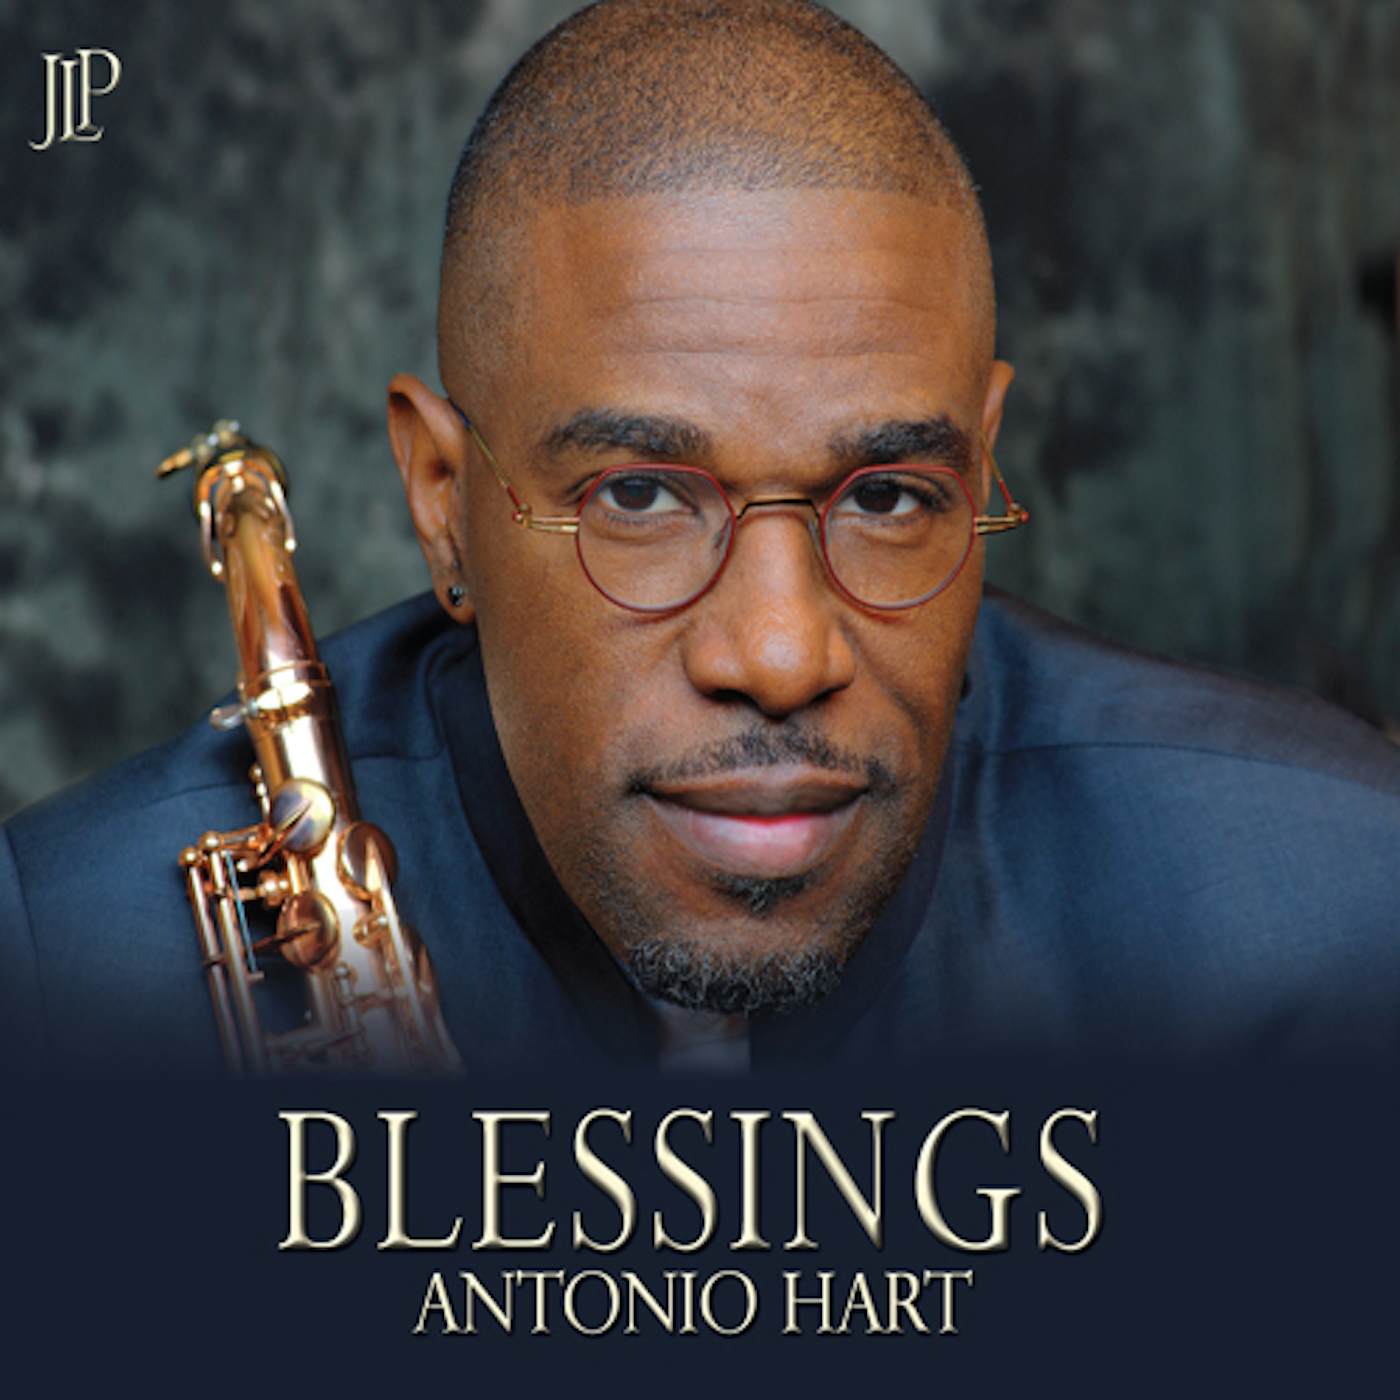 Antonio Hart BLESSINGS CD